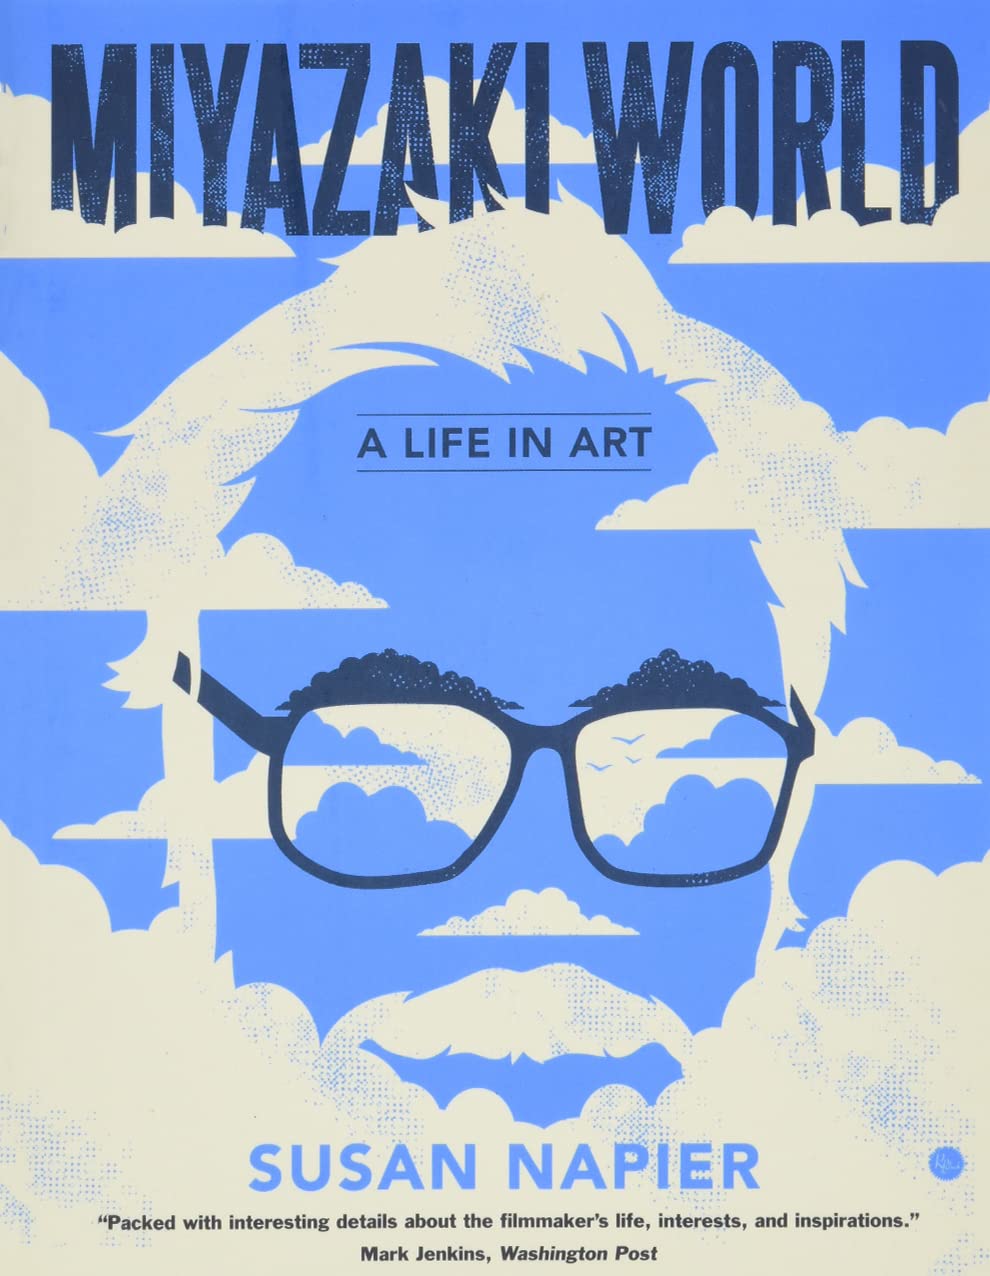 Susan Napier: Miyazakiworld (2019, Yale University Press)